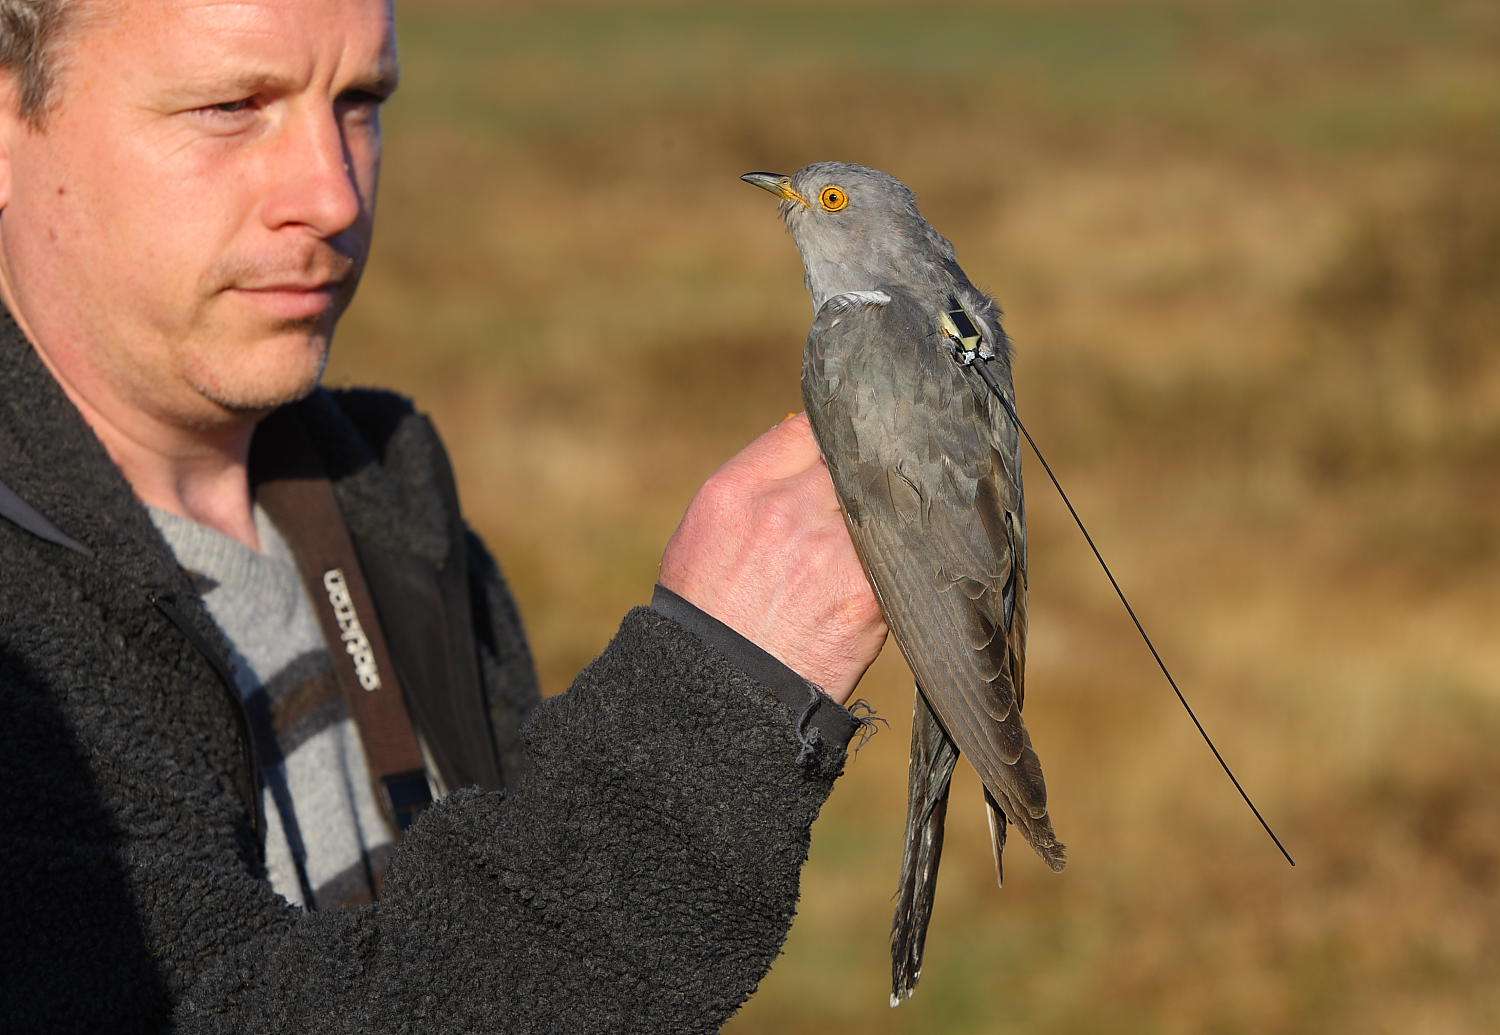 Cuckoo by Charles Tyler at Dartmoor